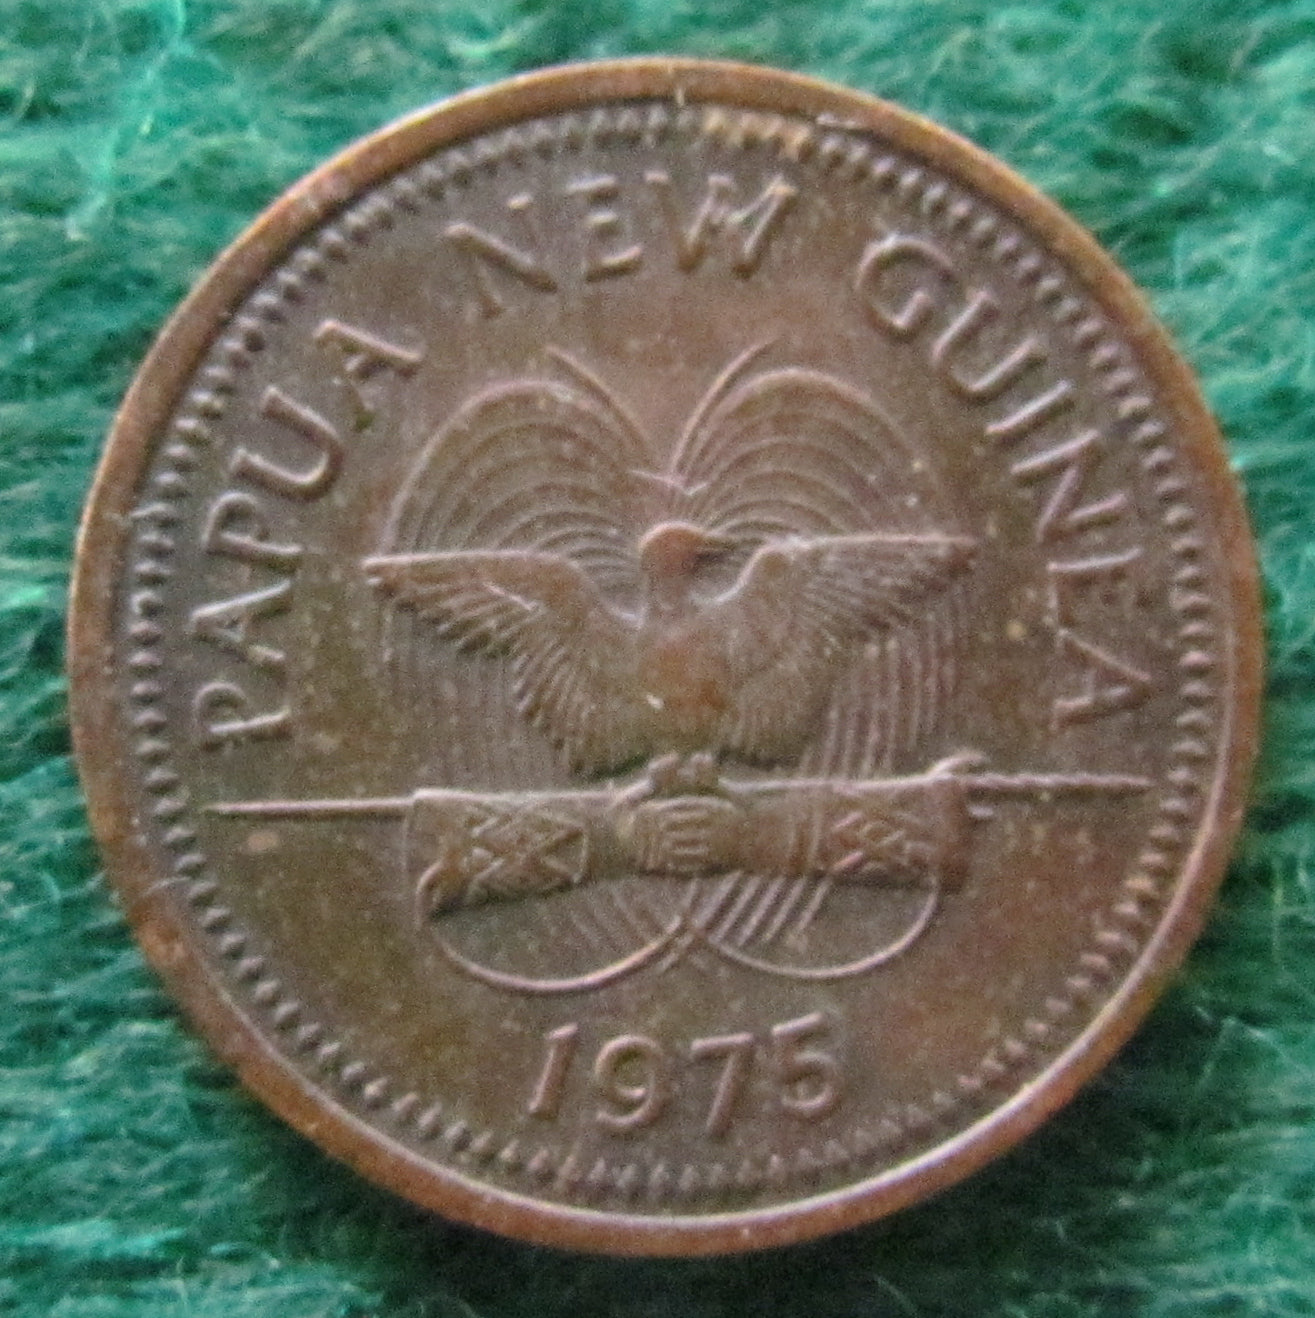 New Guinea 1975 1 Toea Coin - Circulated